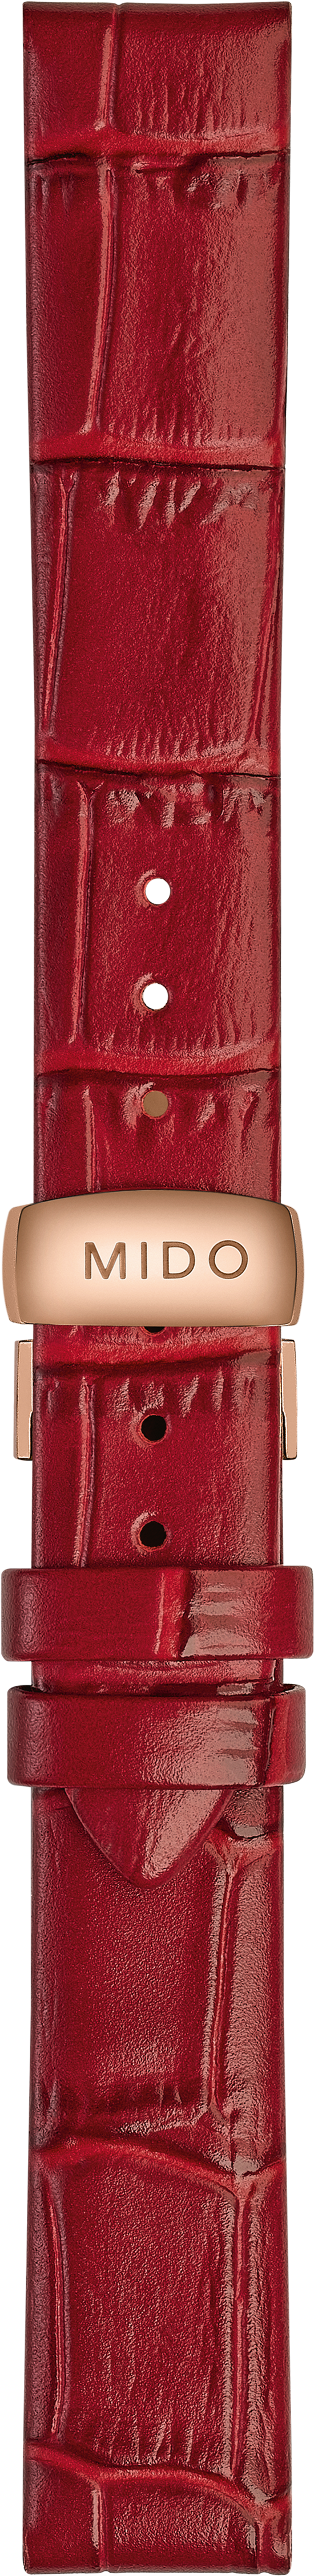 Mido Rainflower red cowhide leather bracelet